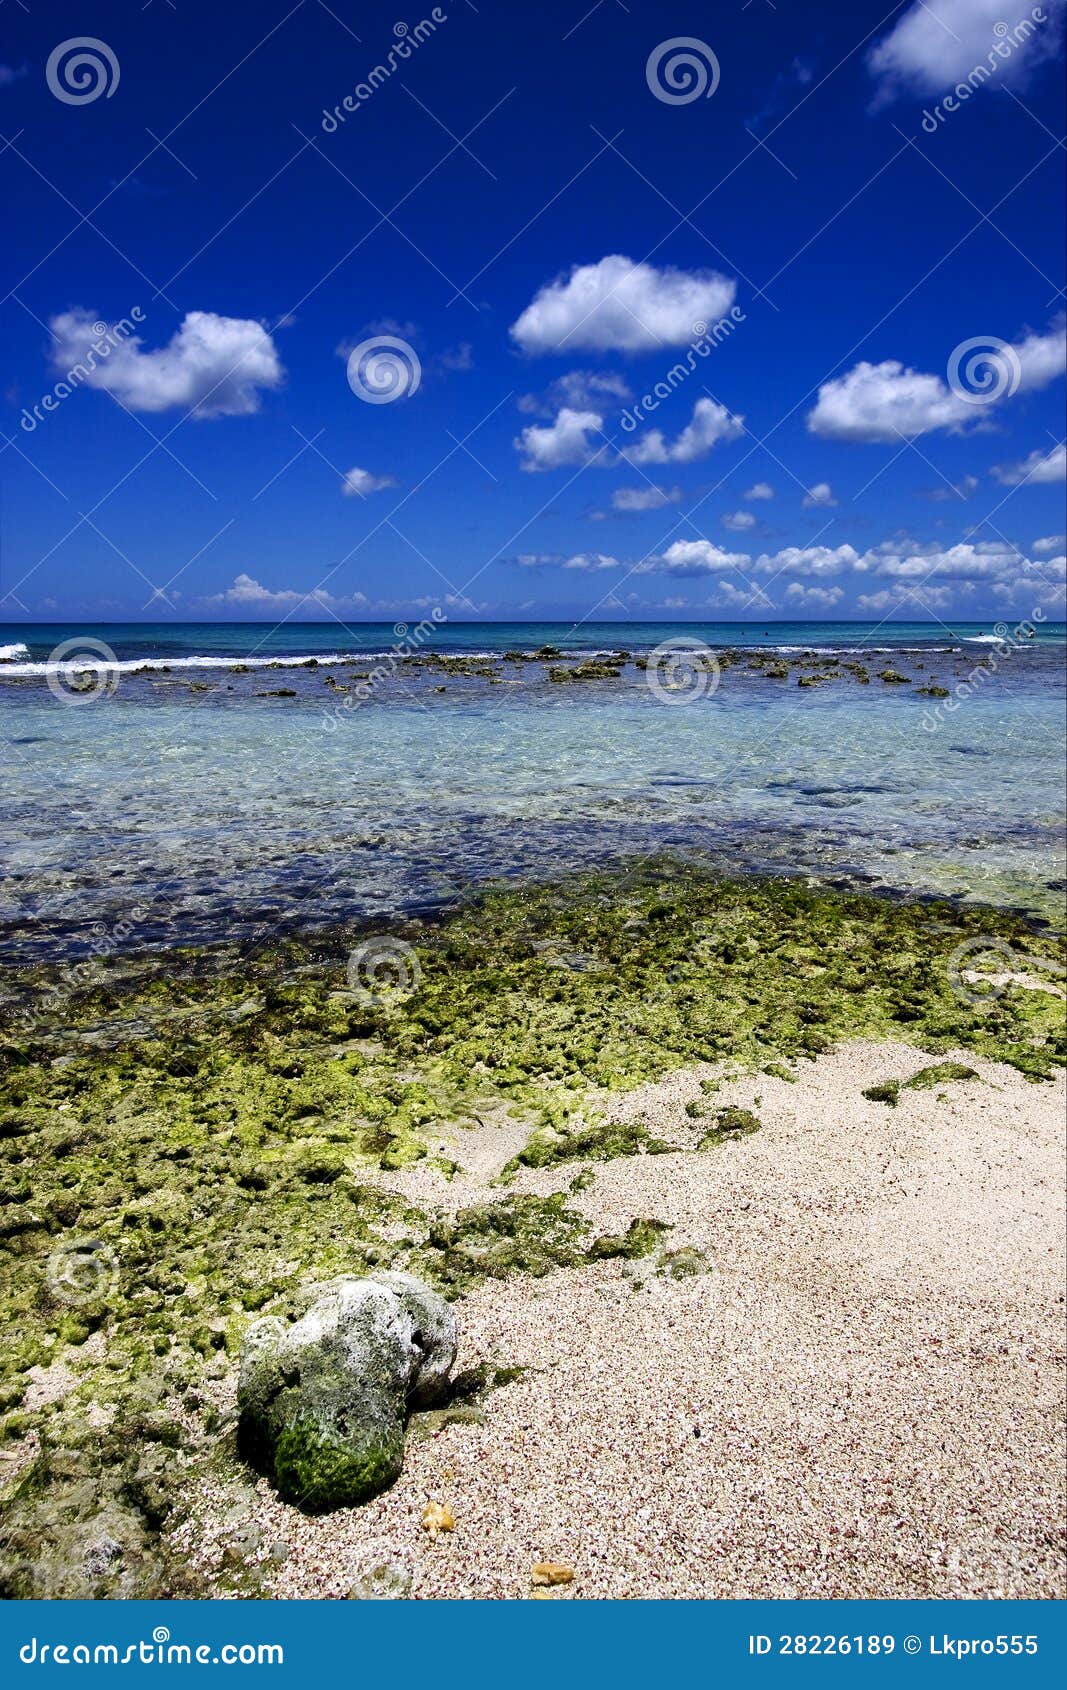 beach rock and stone in republica dominicana